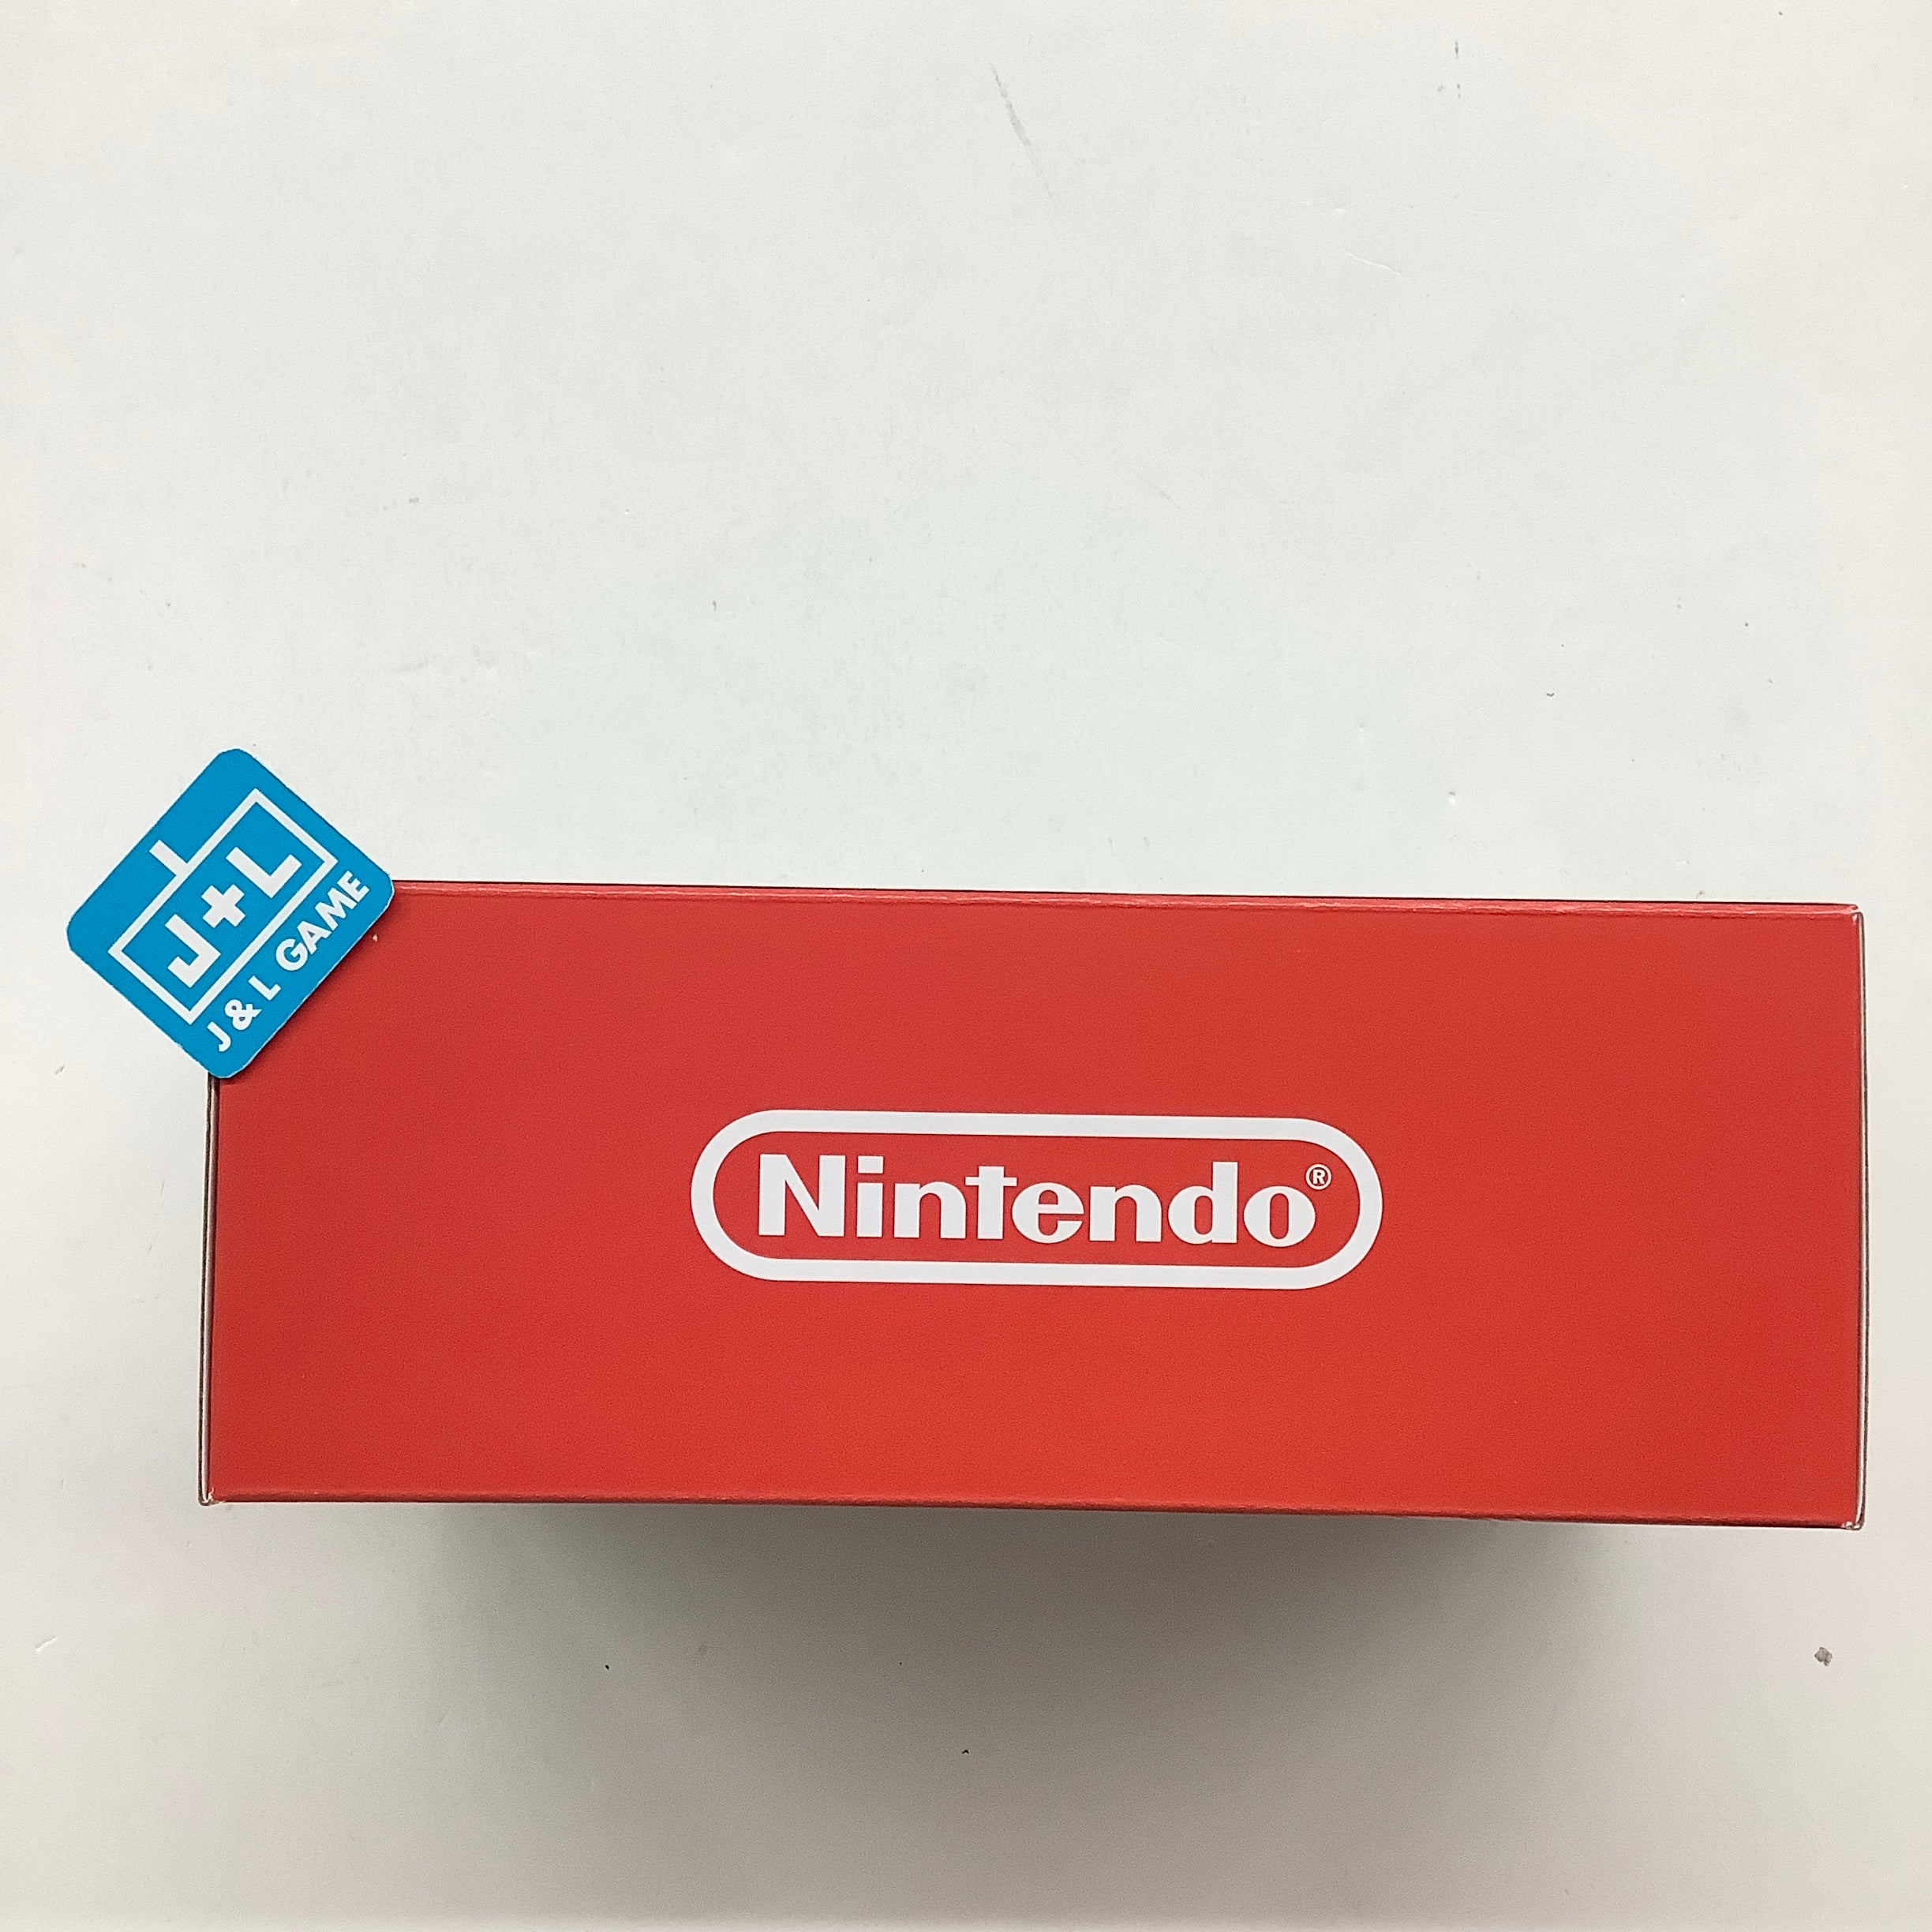 Nintendo Switch Lite Console (Dialga & Palkia Edition) - (NSW) Nintendo Switch CONSOLE Nintendo   